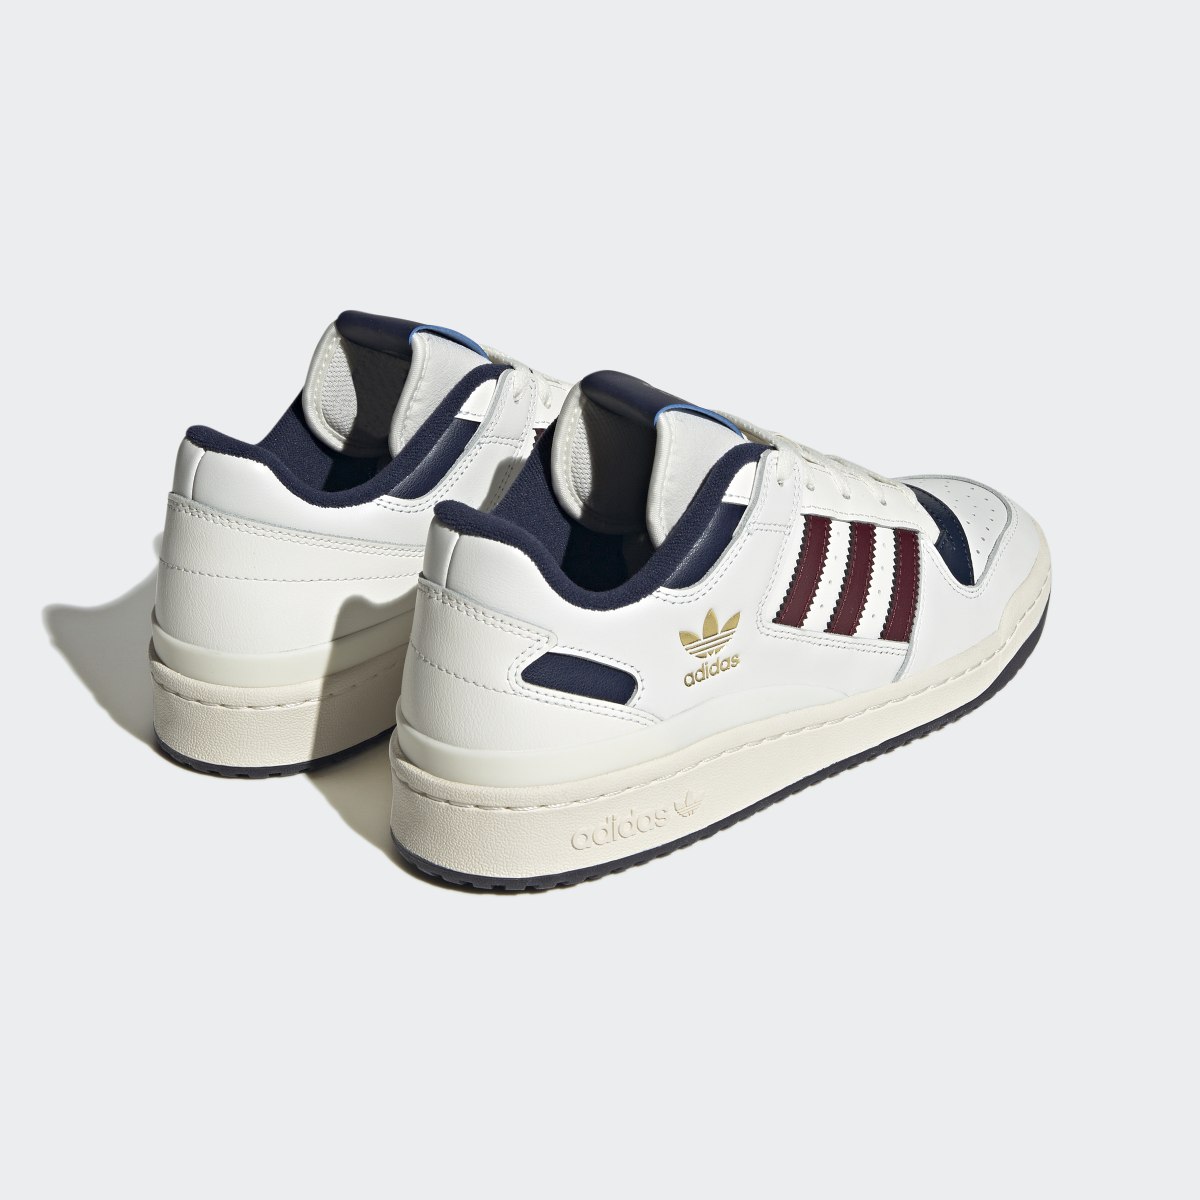 Adidas Forum Low CL Shoes. 7